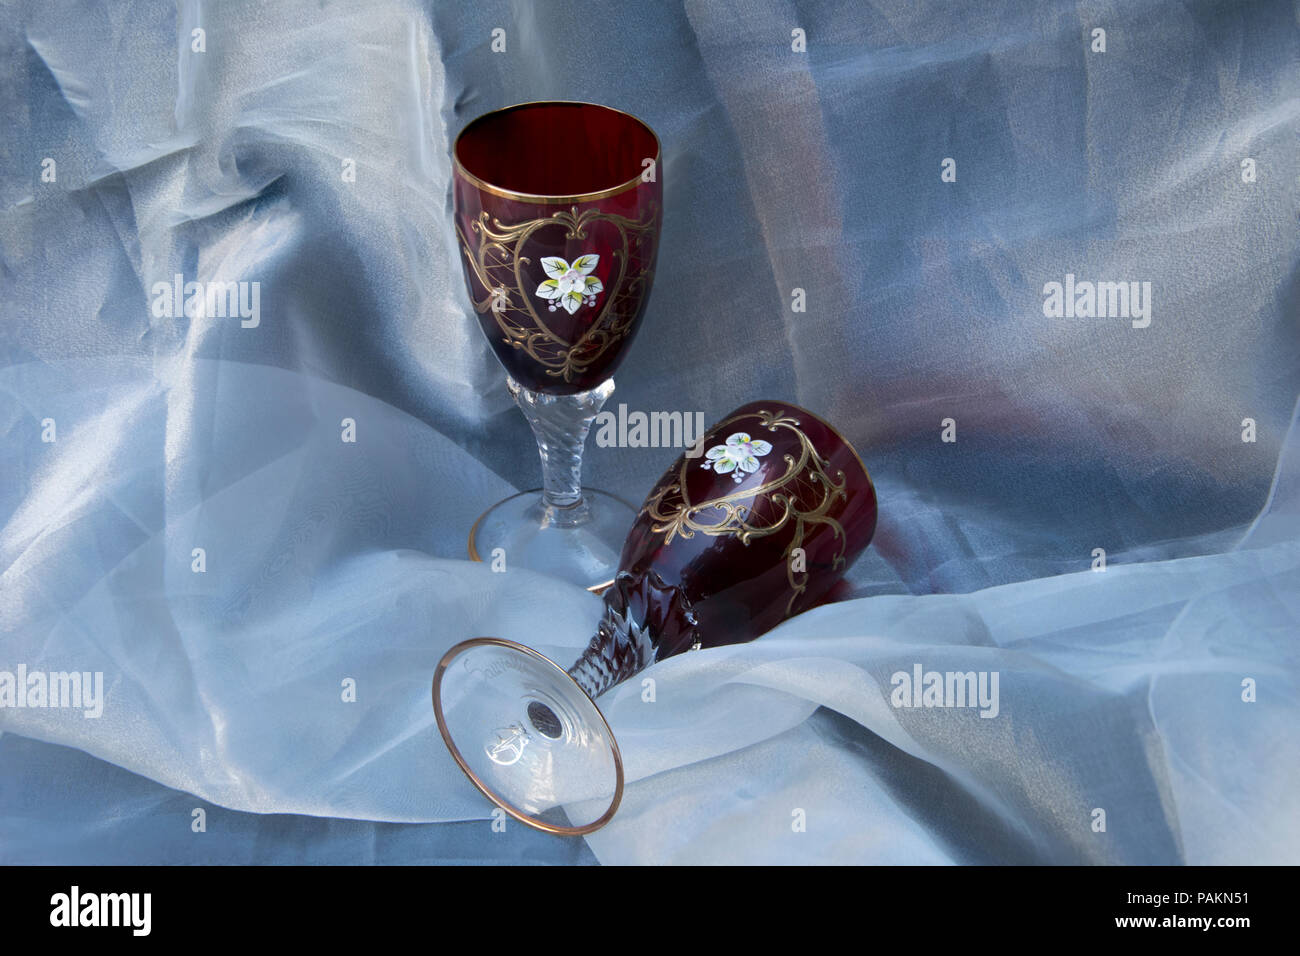 Blue Stem Venetian Glass Diamante Wine Glass - Handmade in Italy Colorful  Murano – Northern Lights Gallery